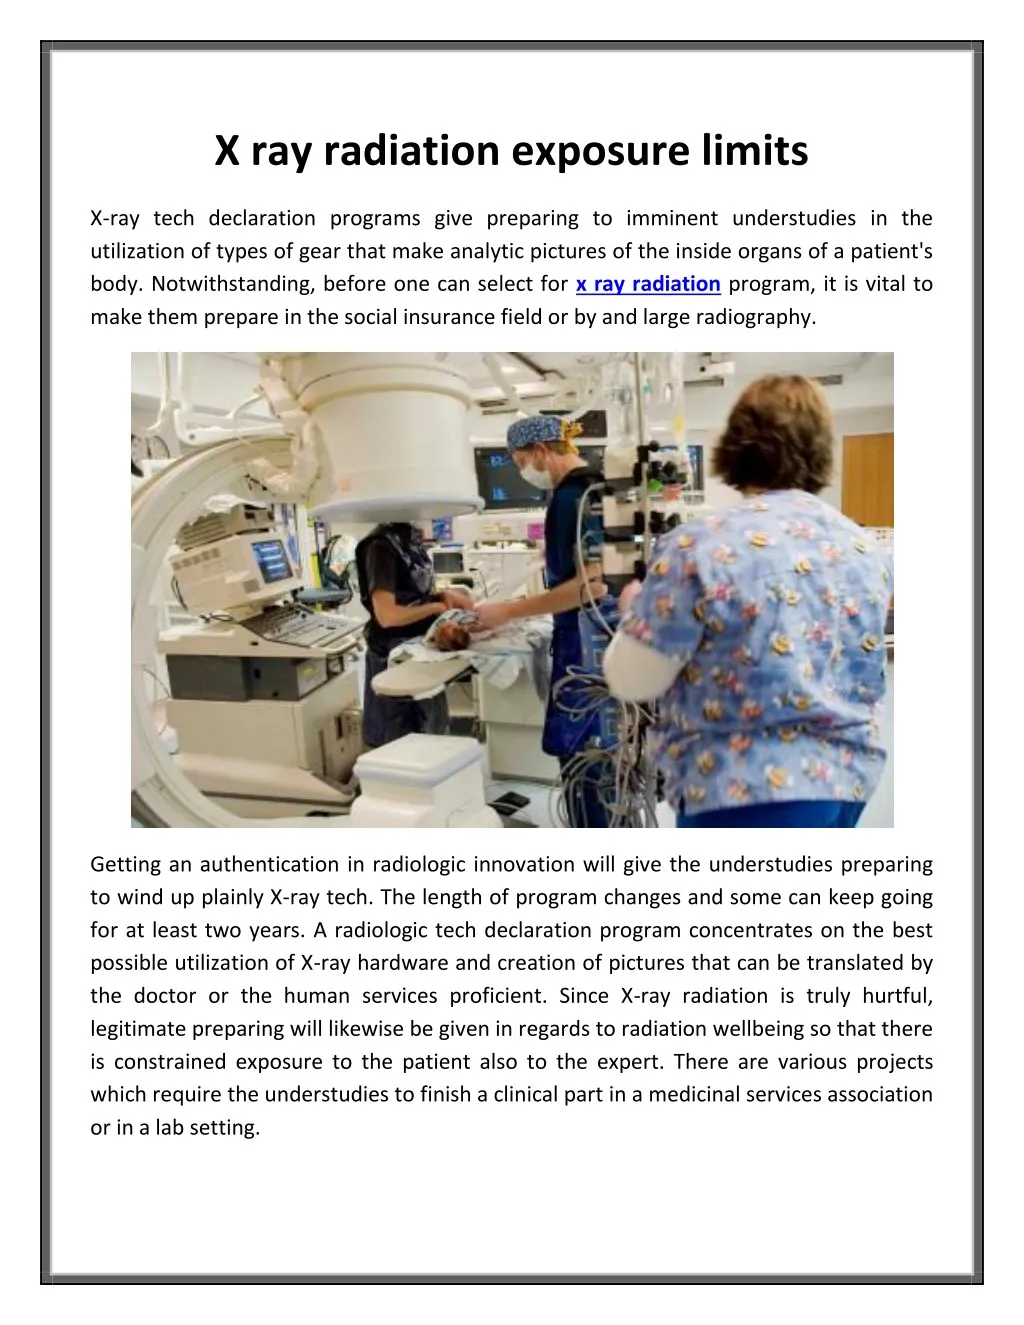 x ray radiation exposure limits